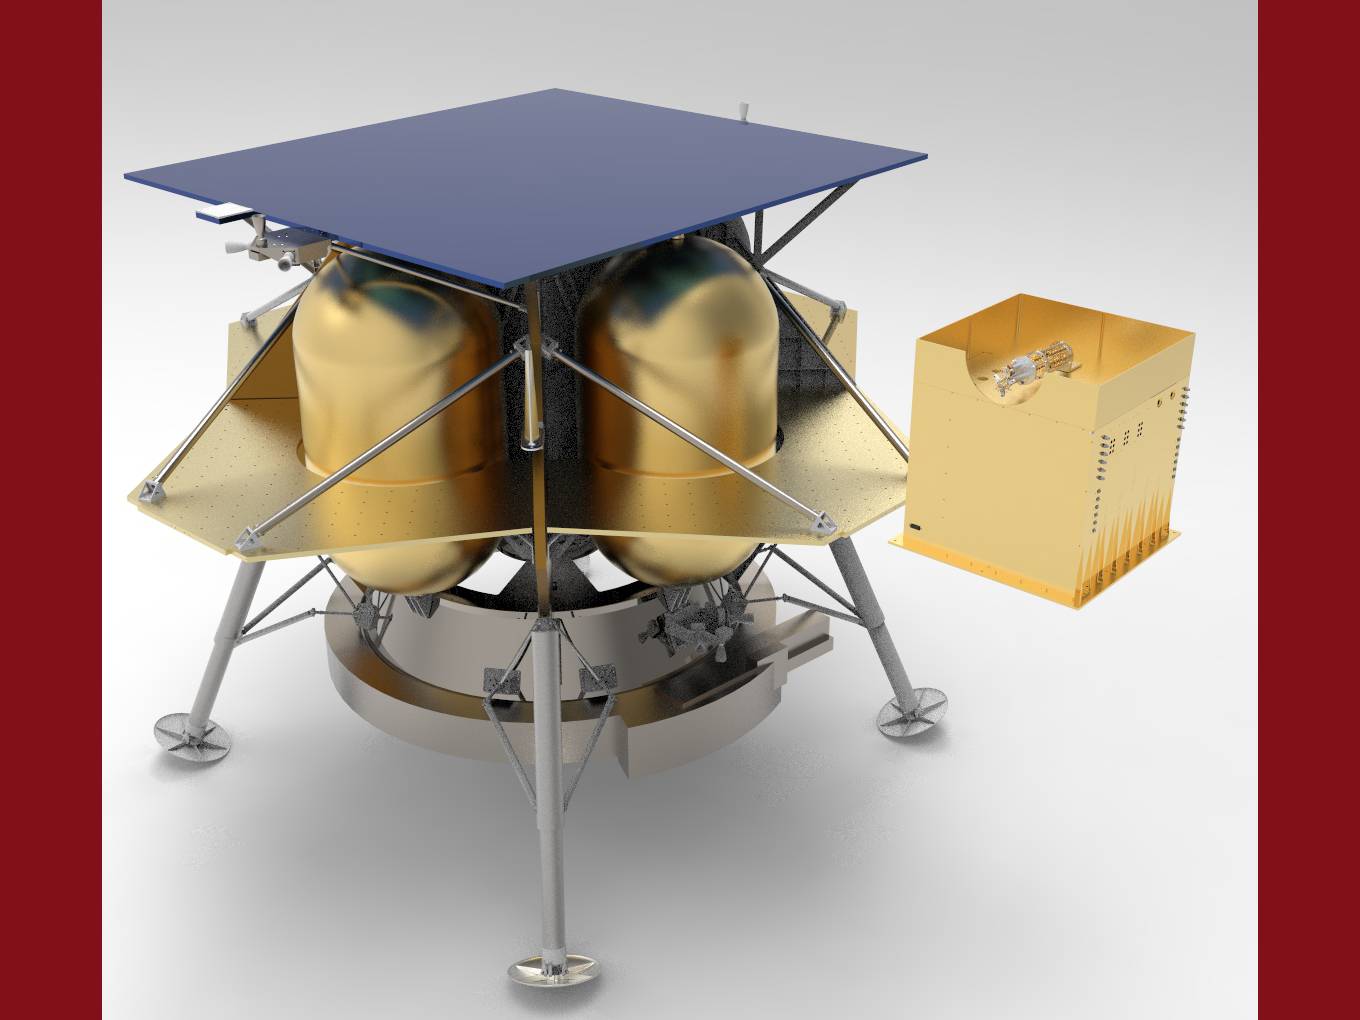 space lander with CODEX